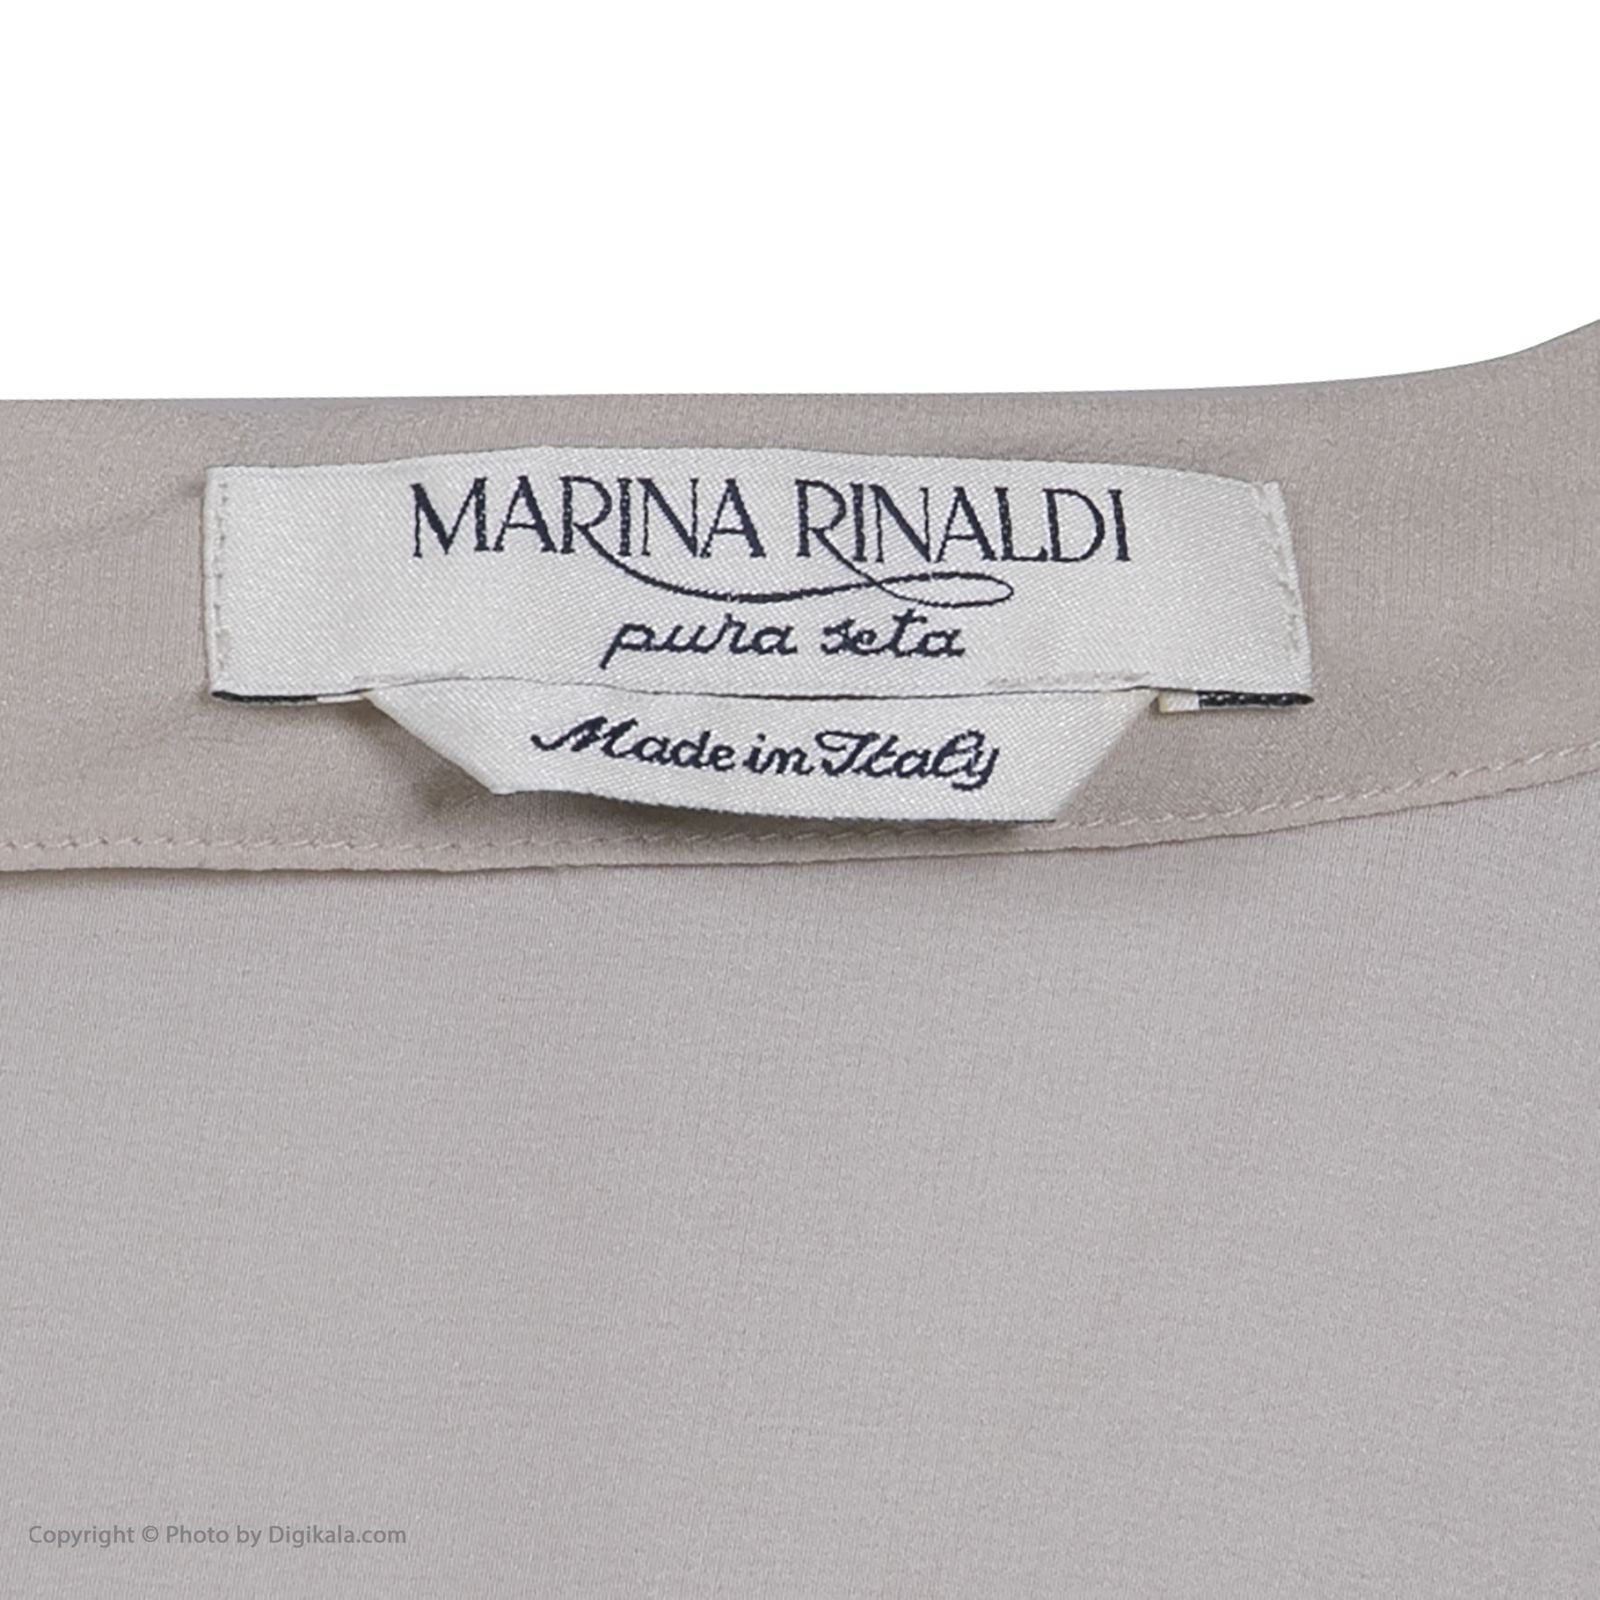 پیراهن زنانه مارینا رینالدی مدل 22211430040104 -  - 5